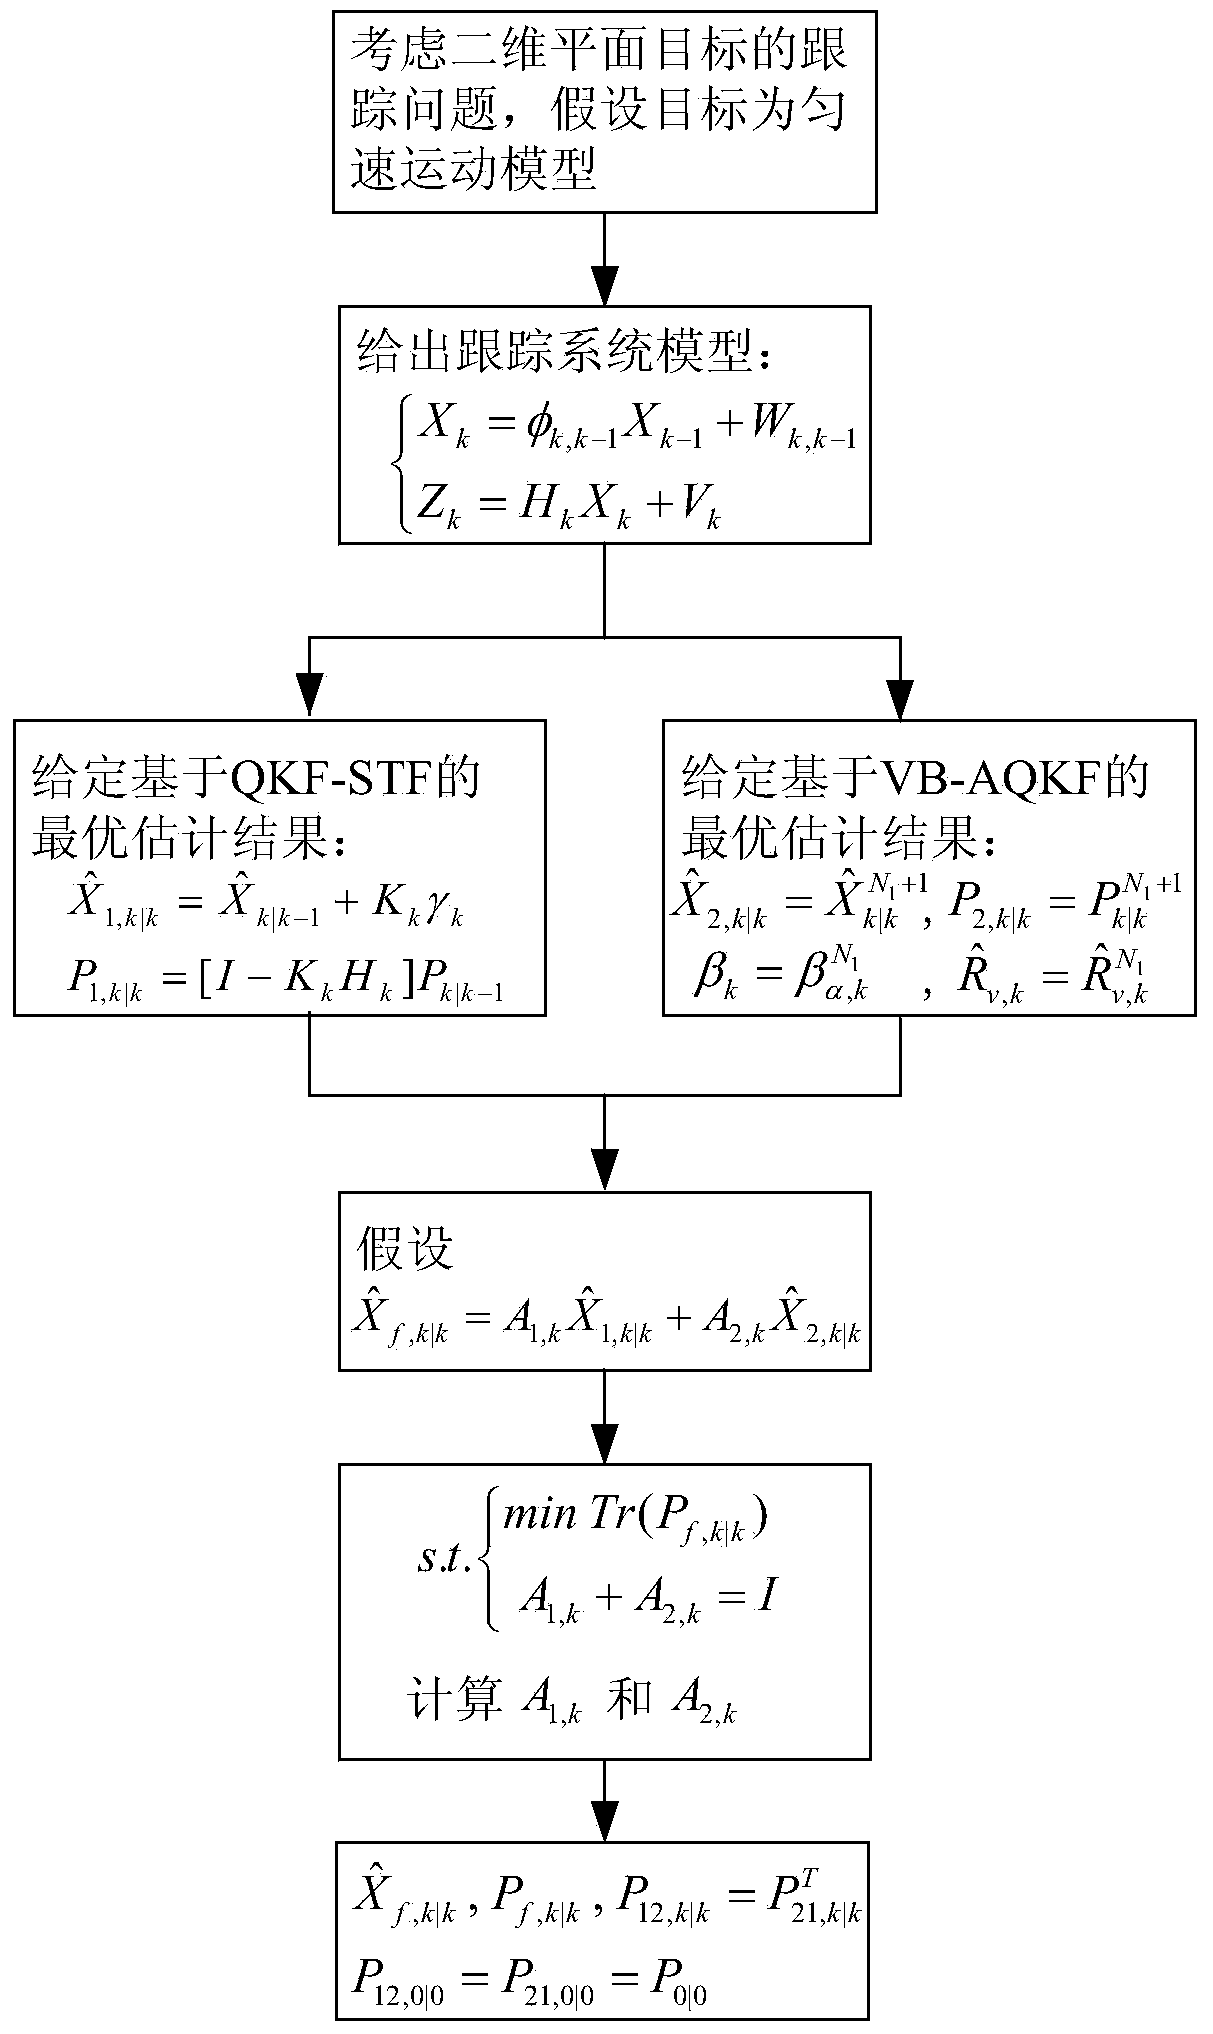 Multi-method fusion based Kalman filtering quantization method